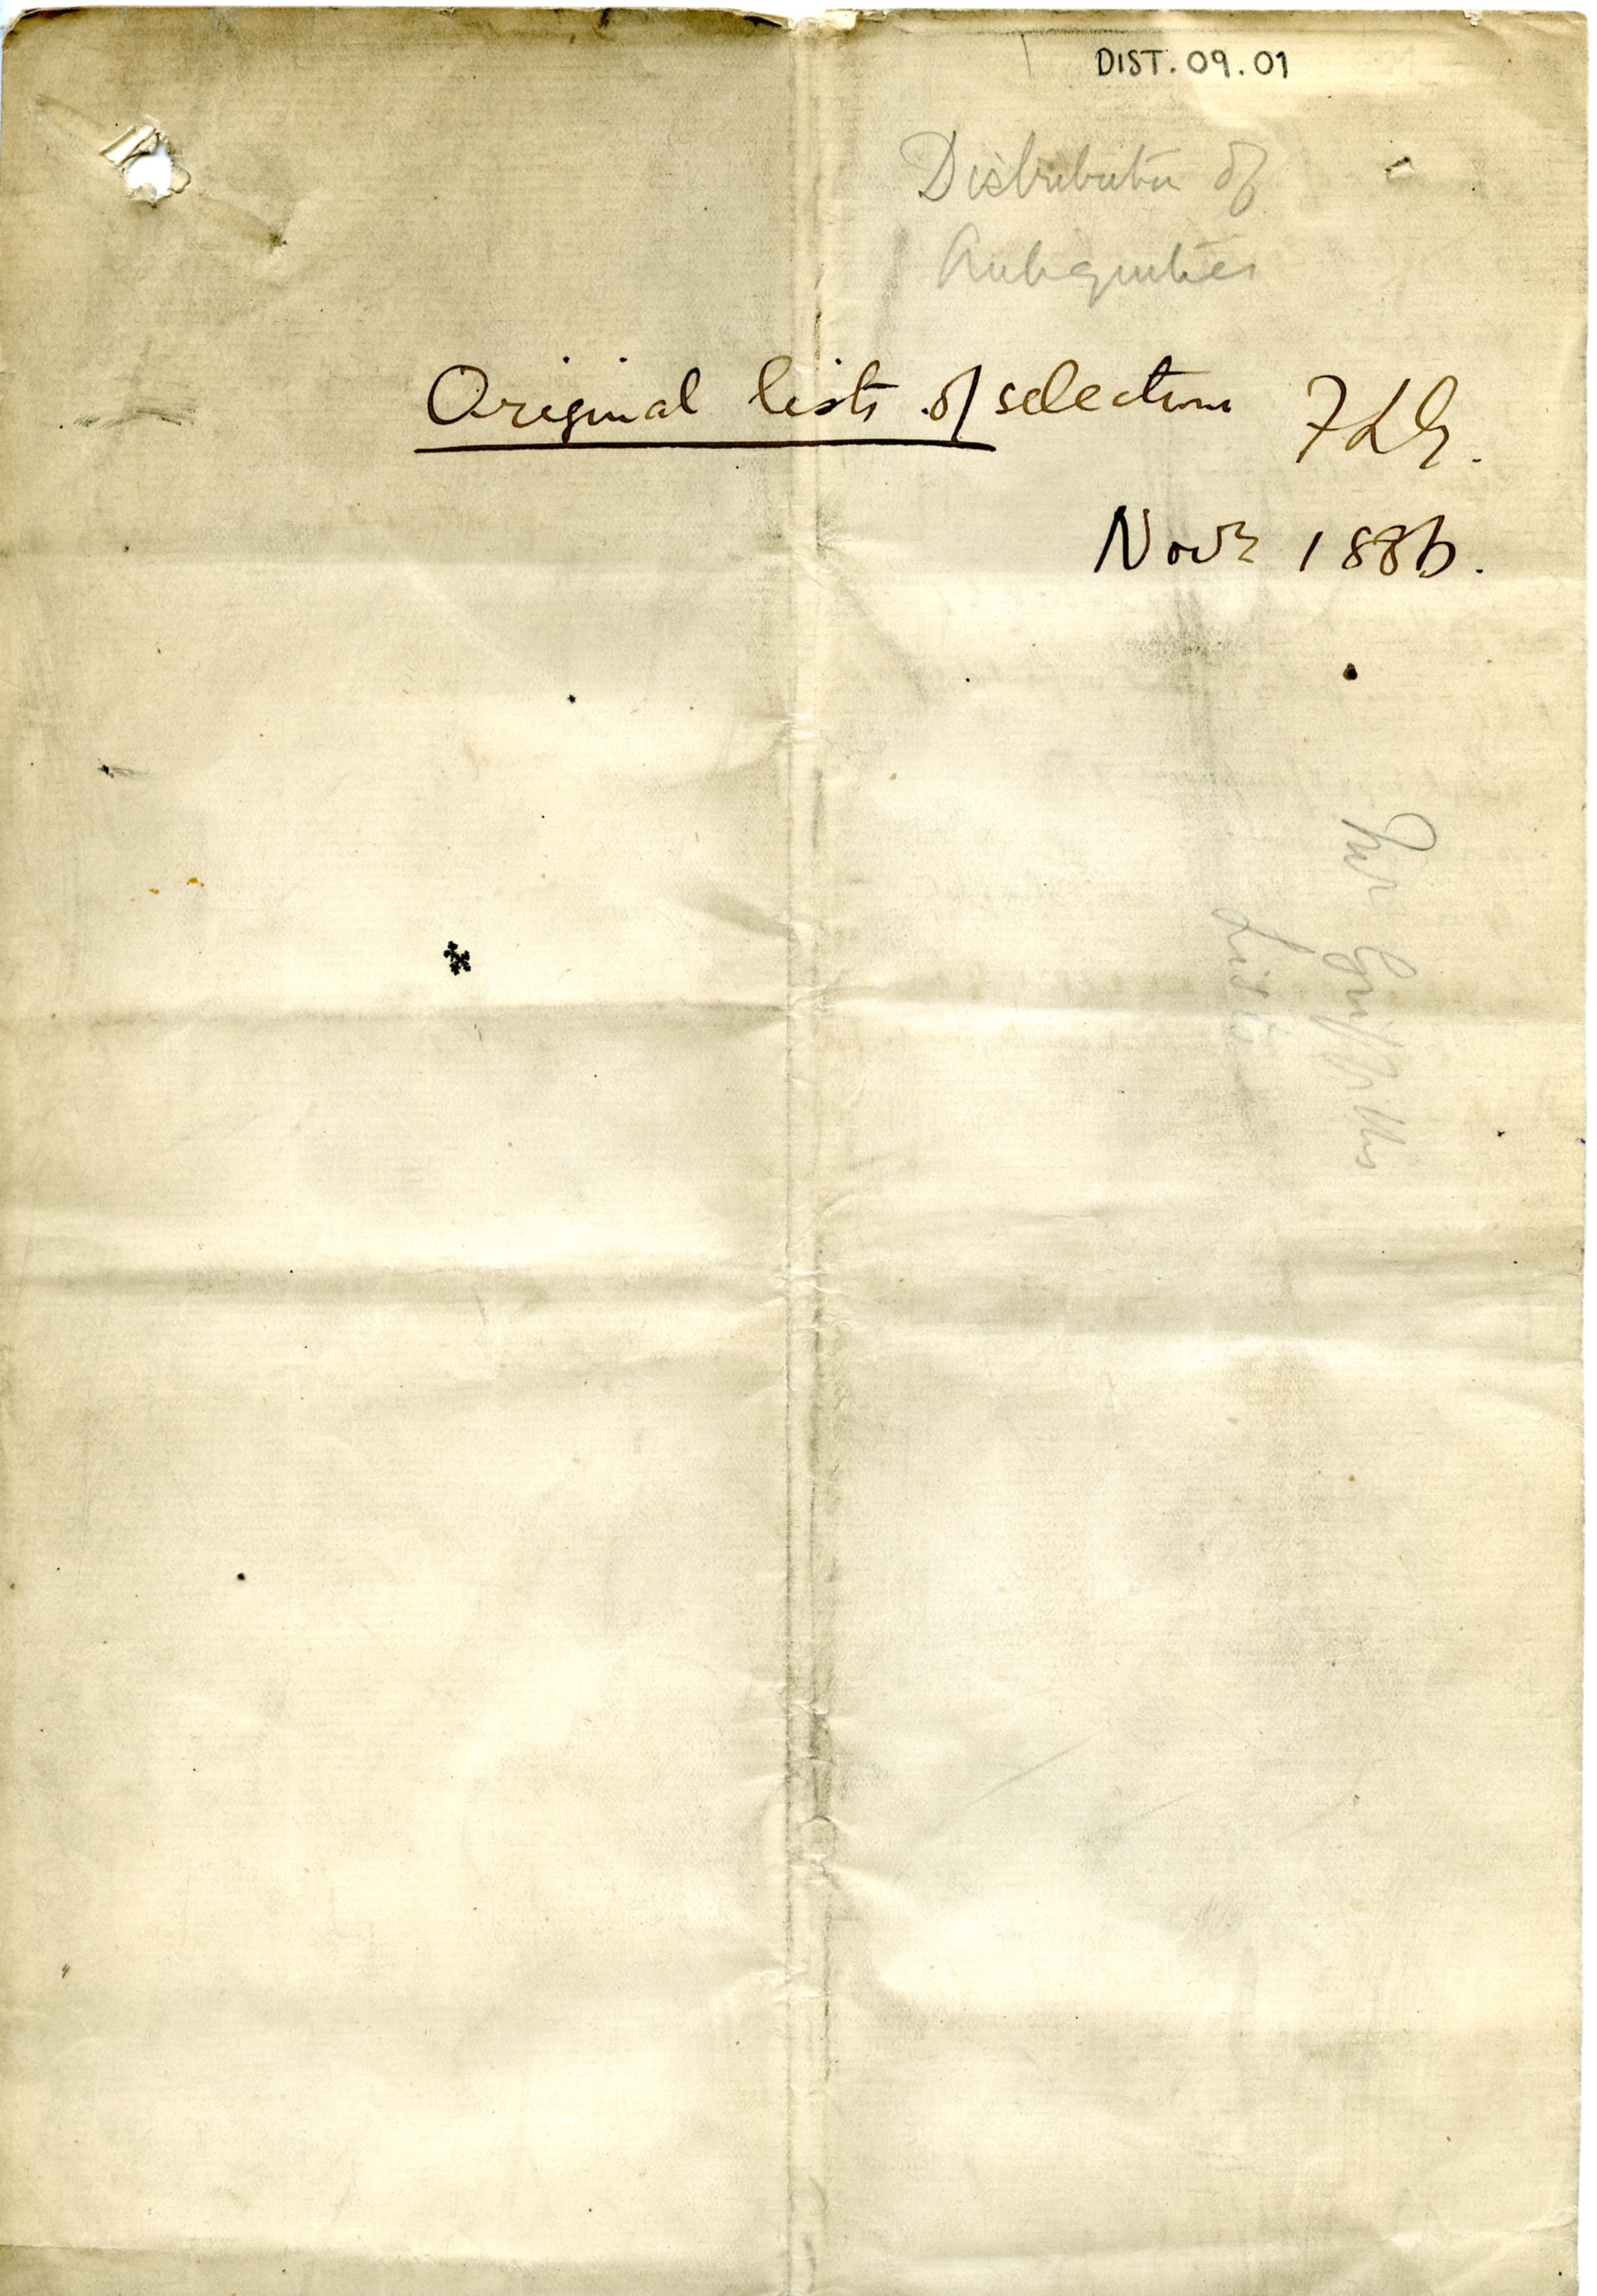 1886 Nebesheh Tell Dafana Distribution List DIST.09.01a